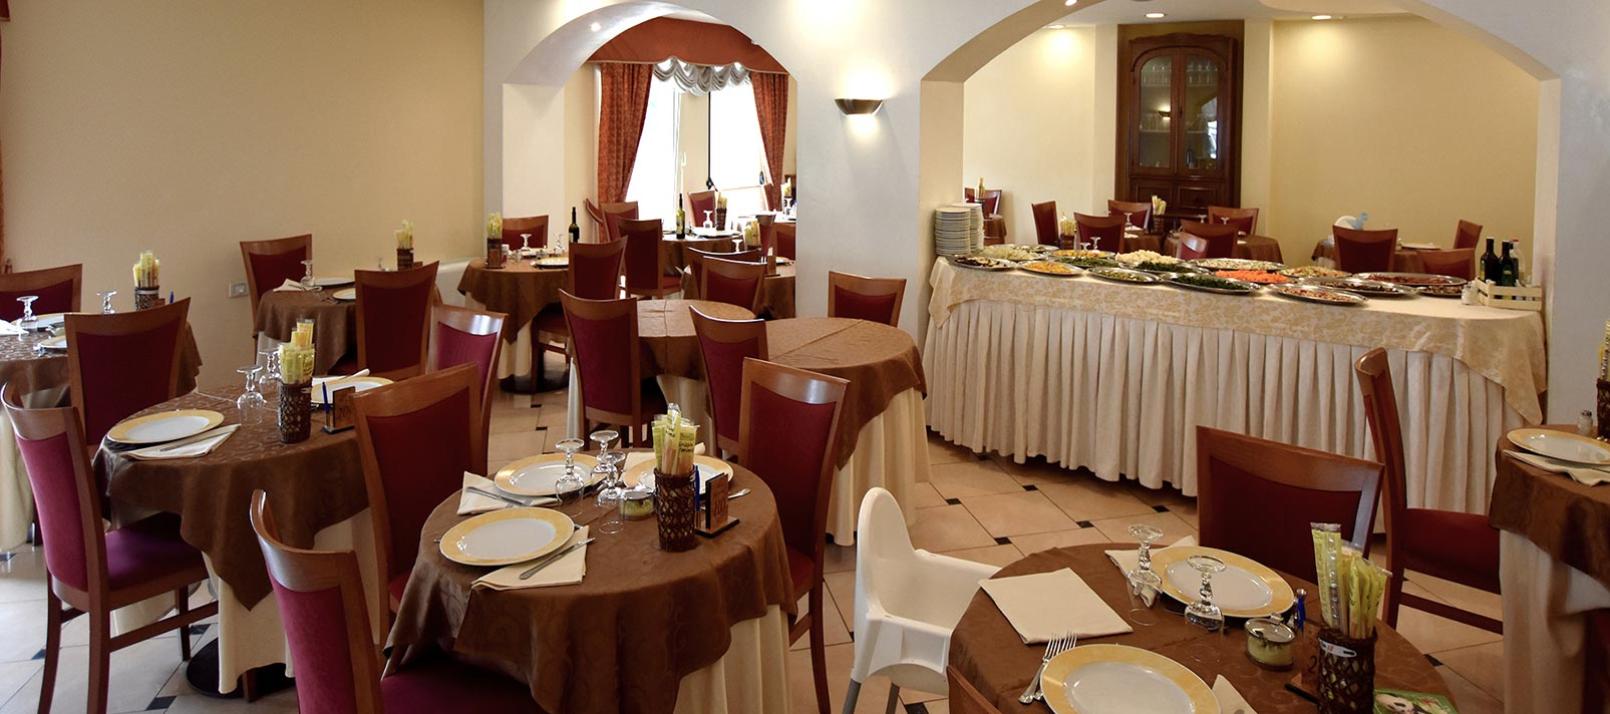 hotelcervia fr hotel-a-cervia-avec-cuisine-traditionnelle 013